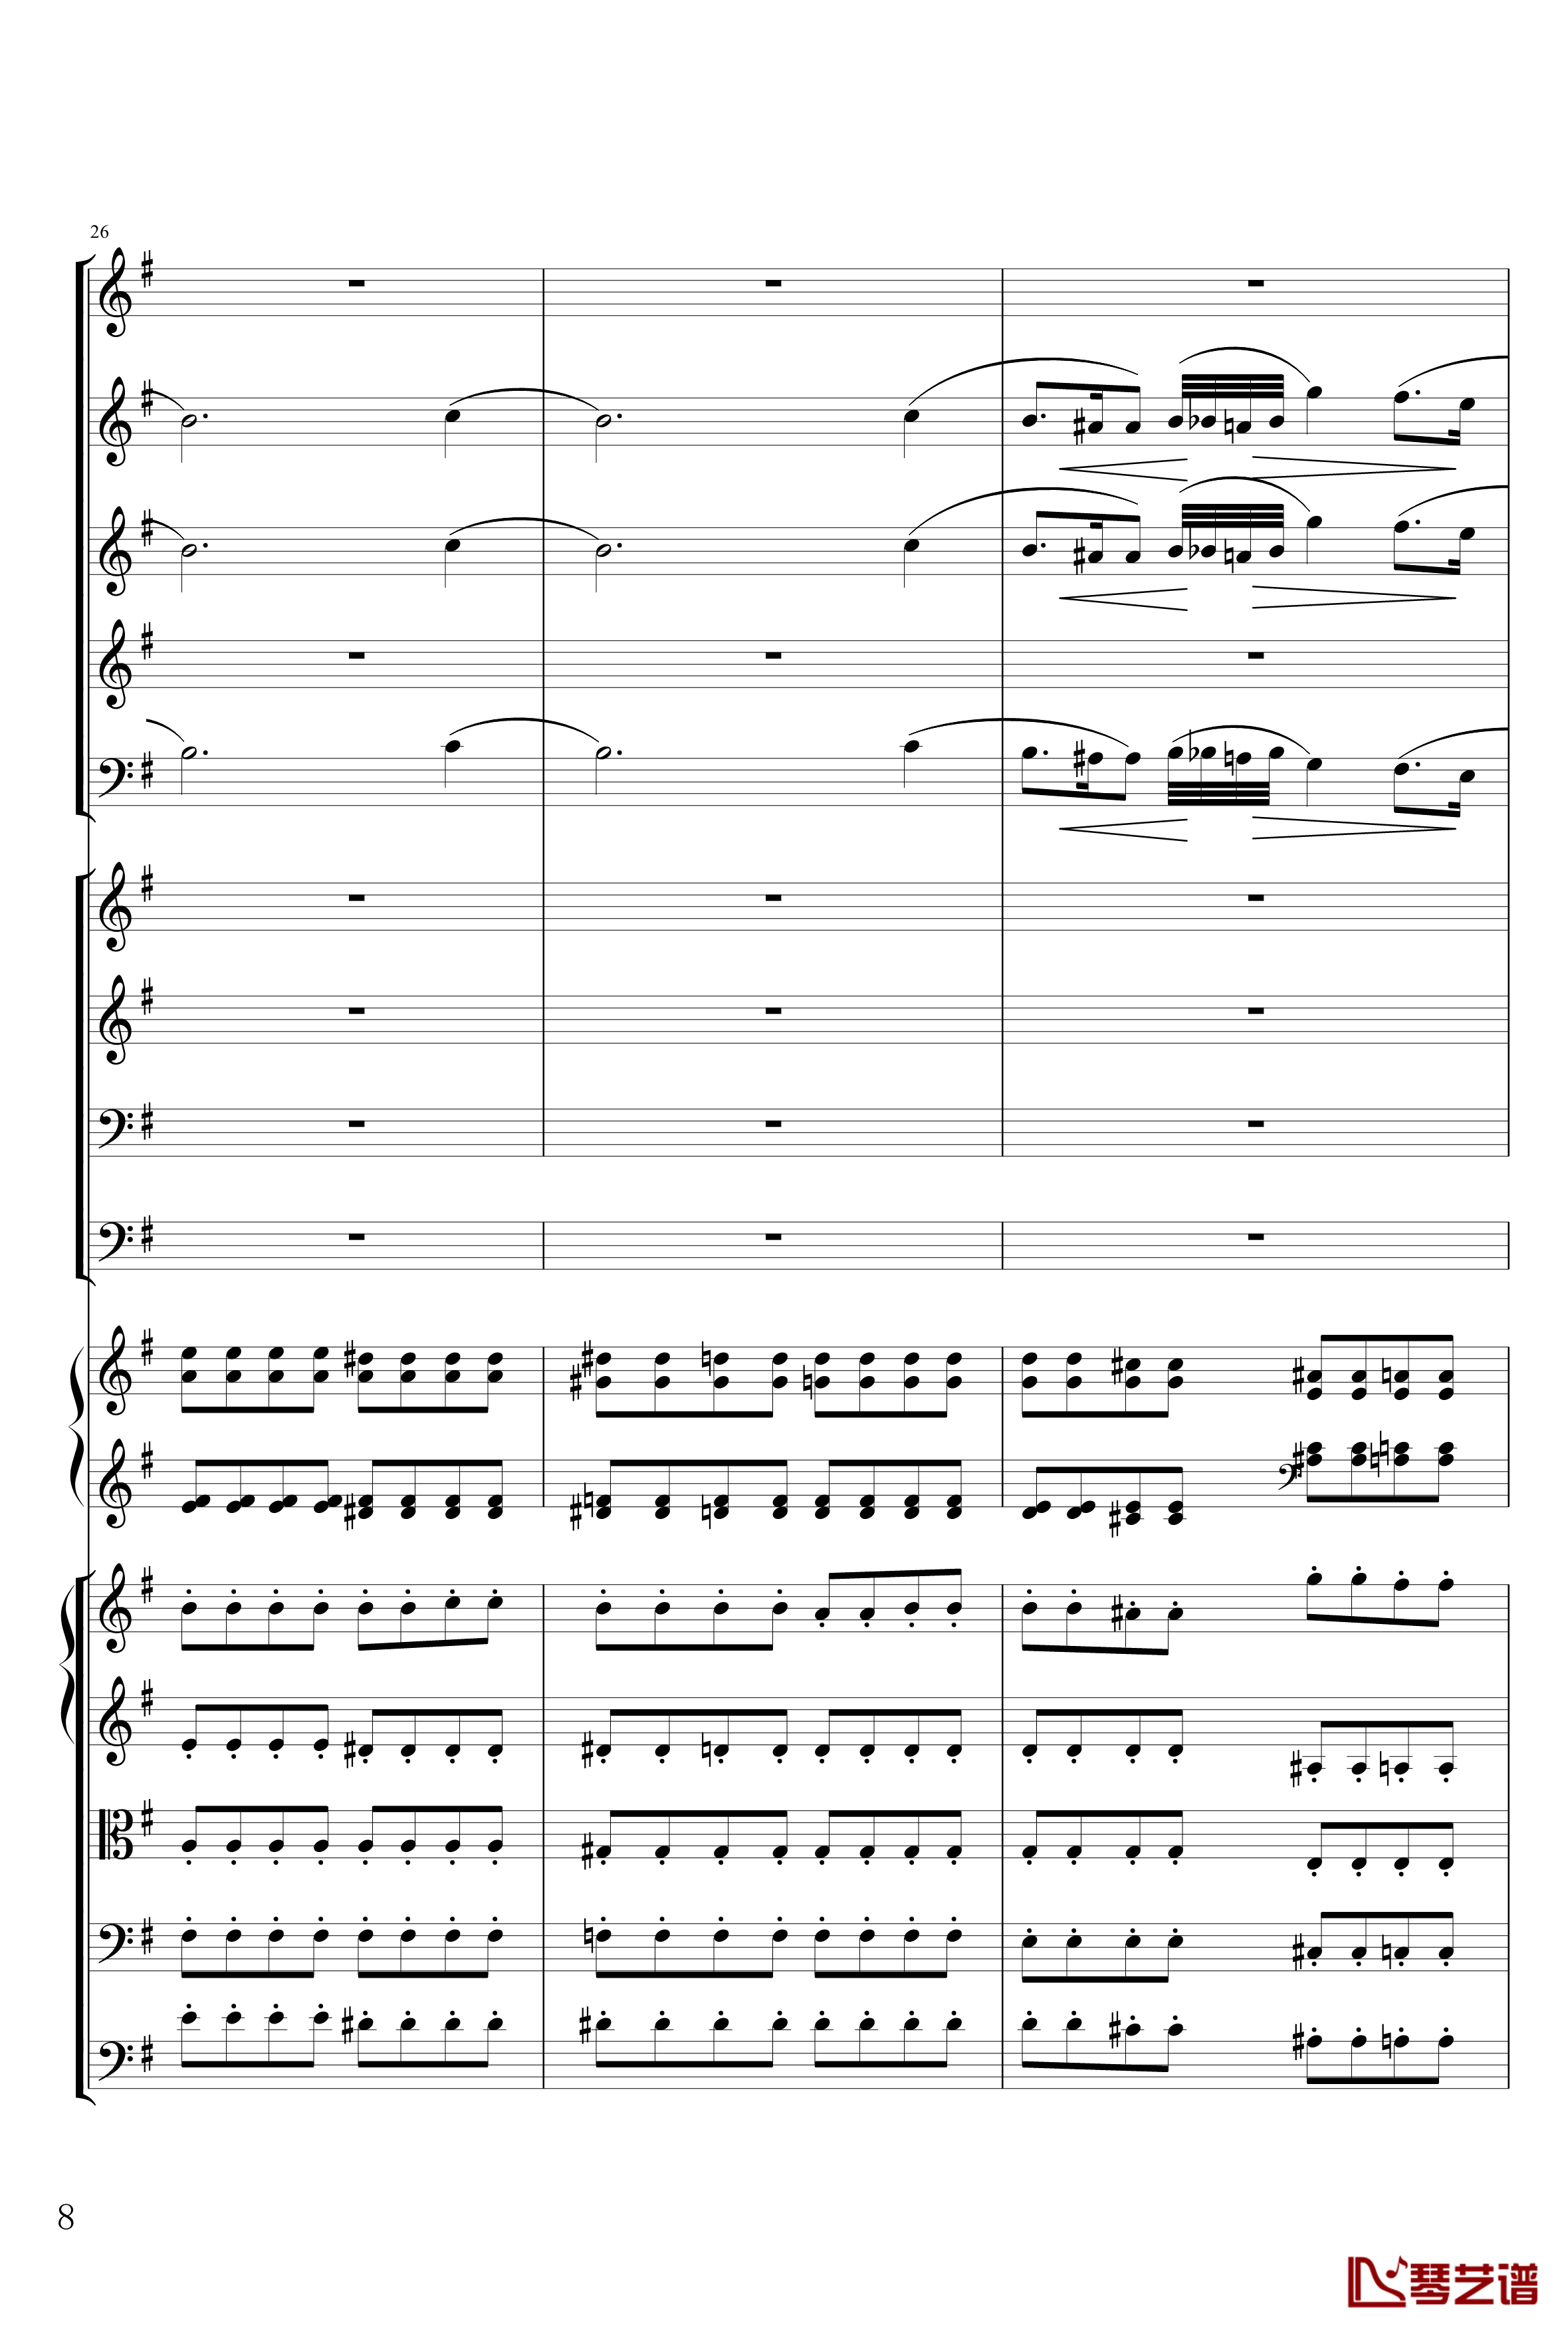 E小调前奏曲钢琴谱-交响乐版-肖邦-chopin8